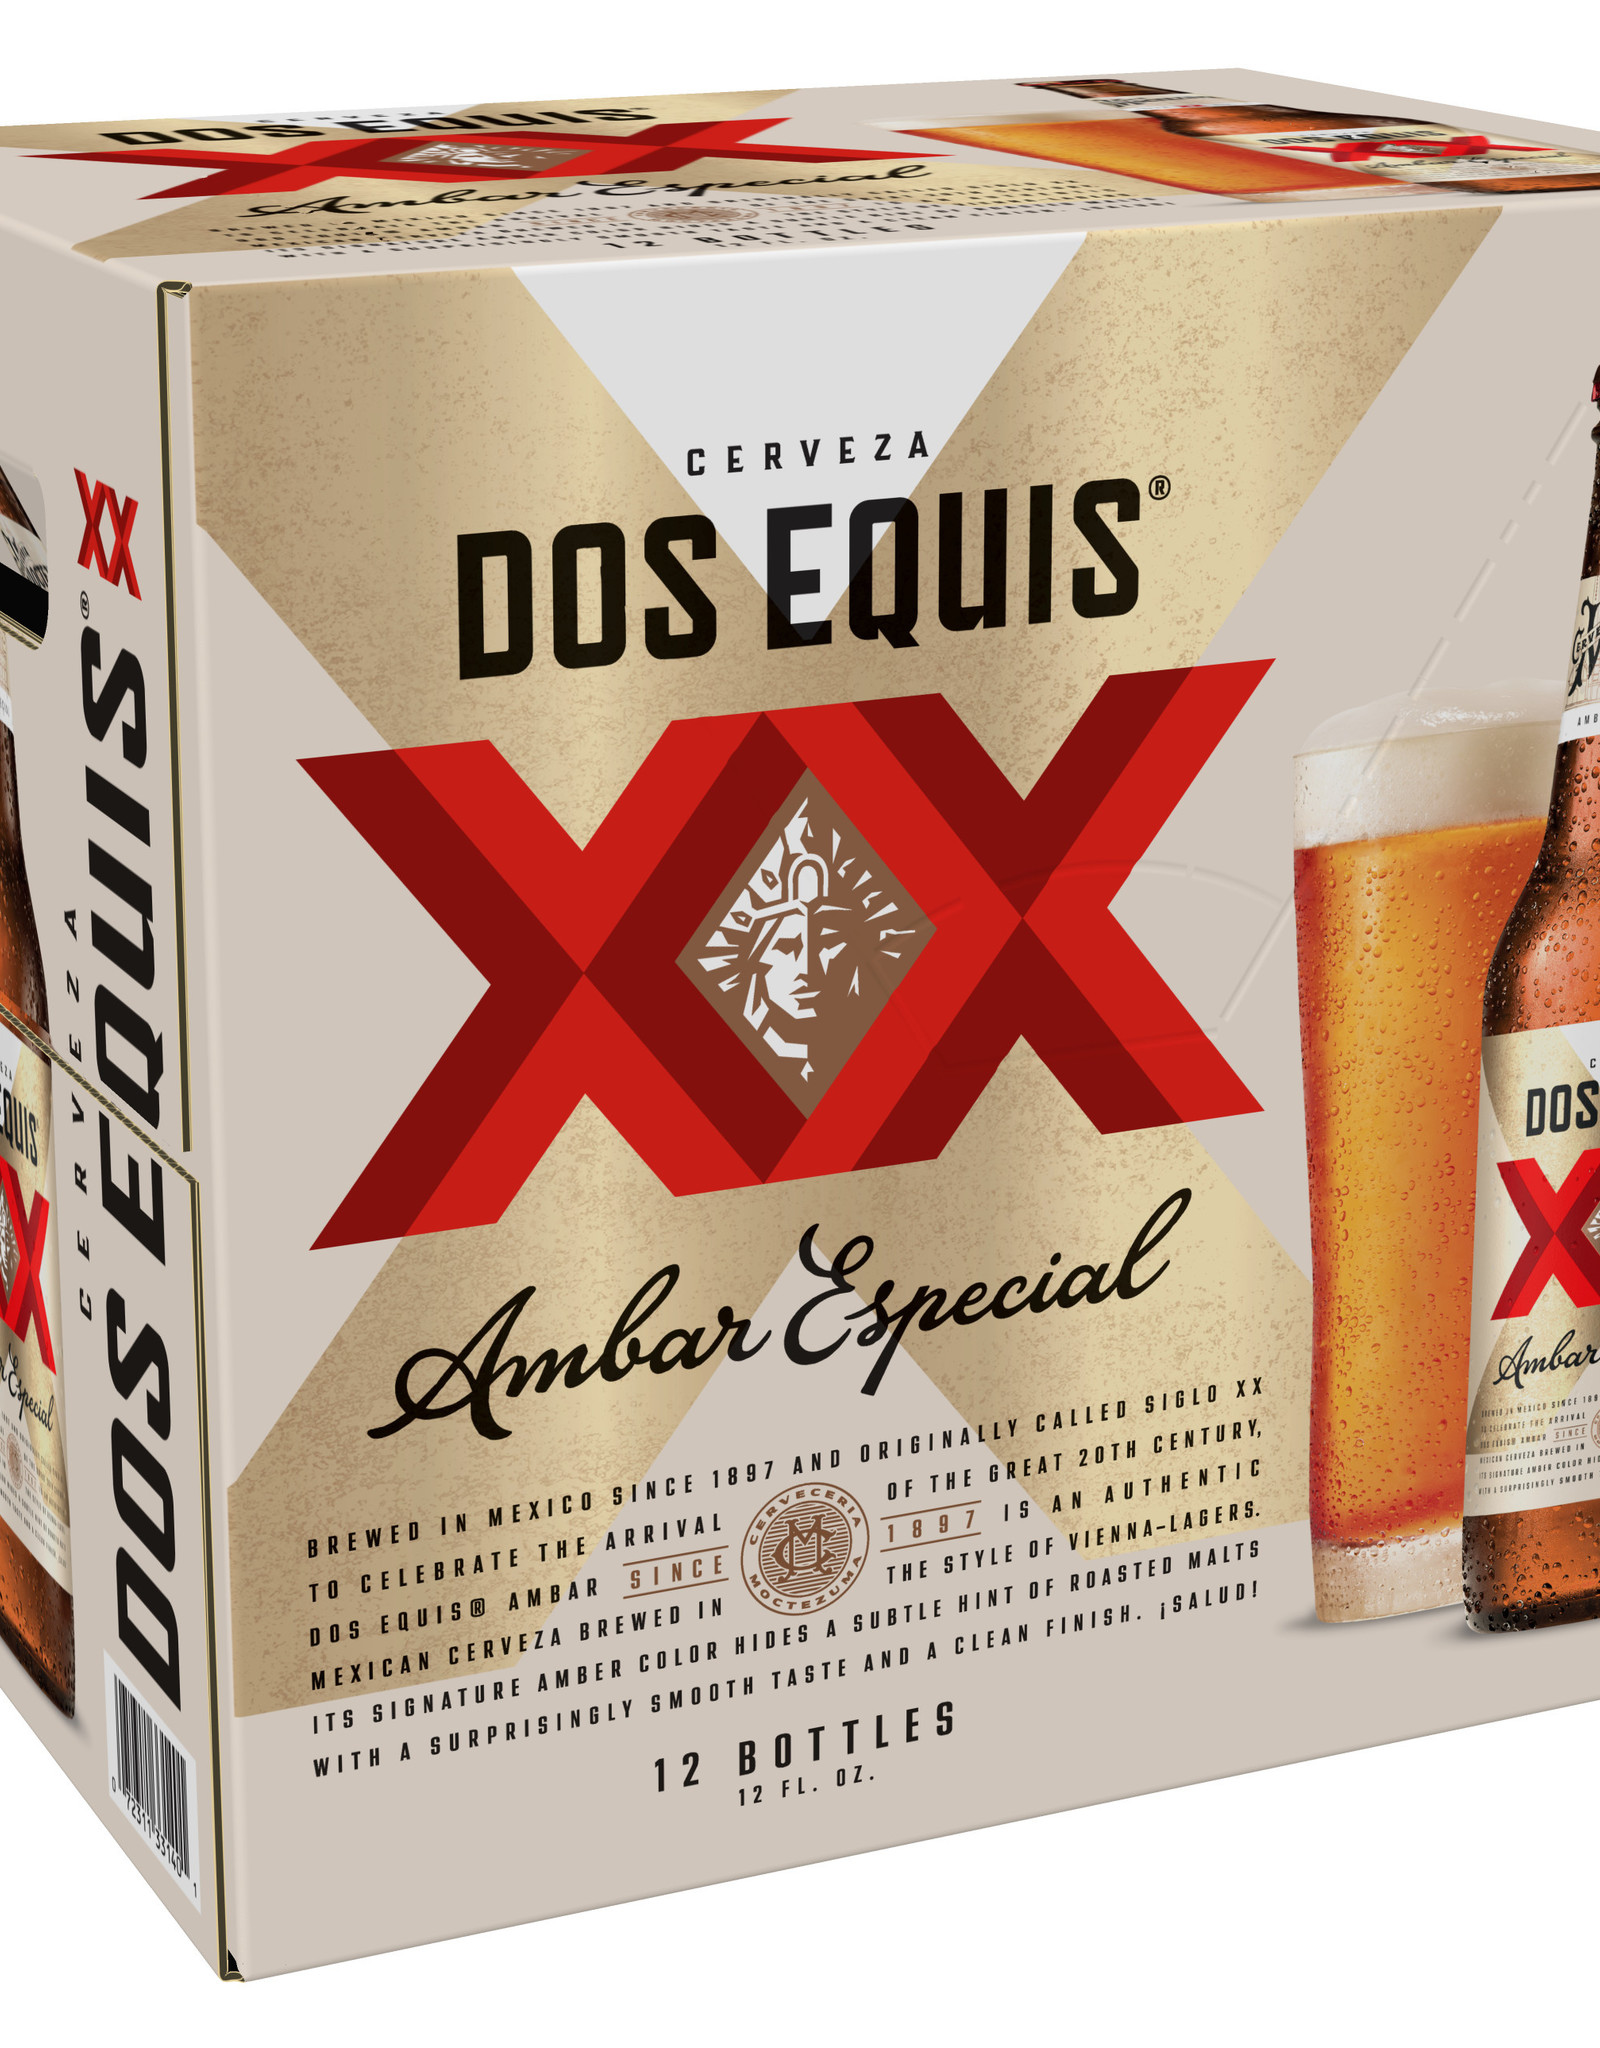 Dos Equis Amber Especial 12x12 oz bottles